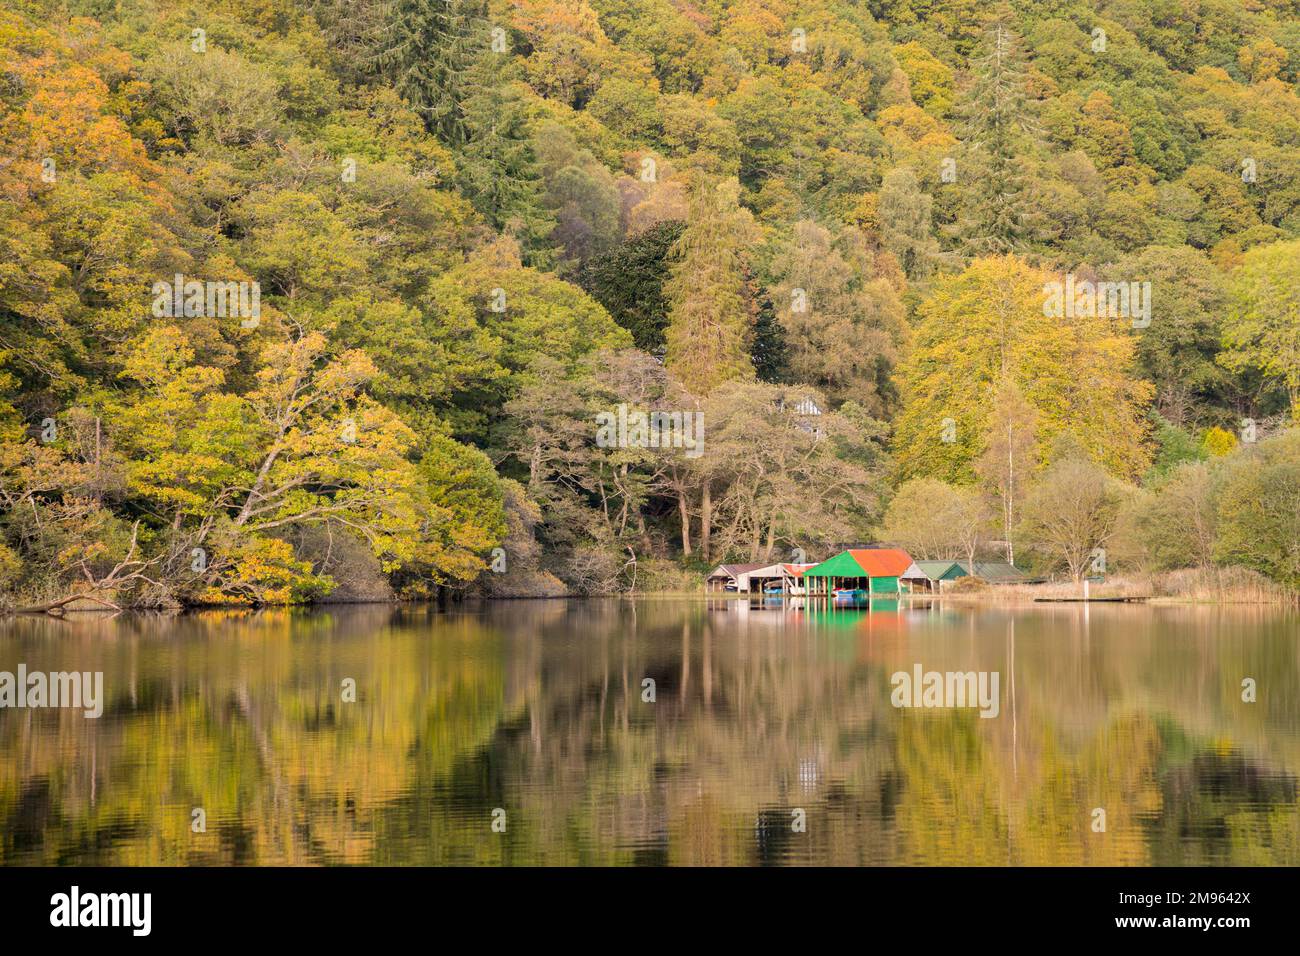 Boat houses on Loch Ard in autumn near Milton, Loch Lomond and Trossachs National Park, Scotland Stock Photo